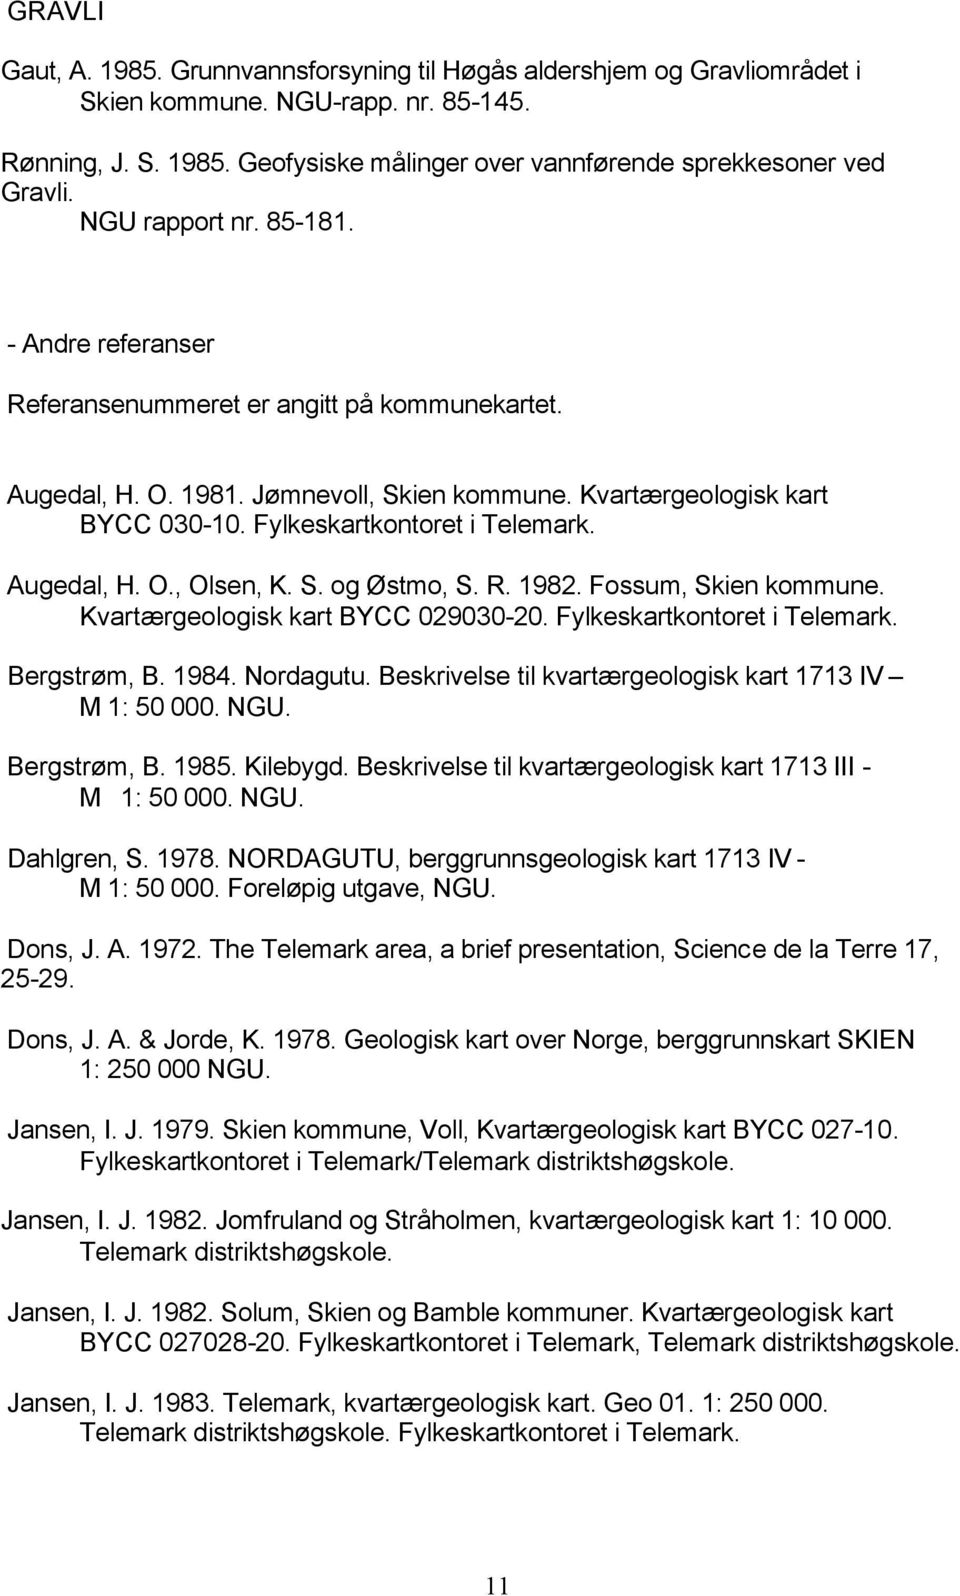 Fylkeskartkontoret i Telemark. Augedal, H. O., Olsen, K. S. og Østmo, S. R. 1982. Fossum, Skien kommune. Kvartærgeologisk kart BYCC 029030-20. Fylkeskartkontoret i Telemark. Bergstrøm, B. 1984.